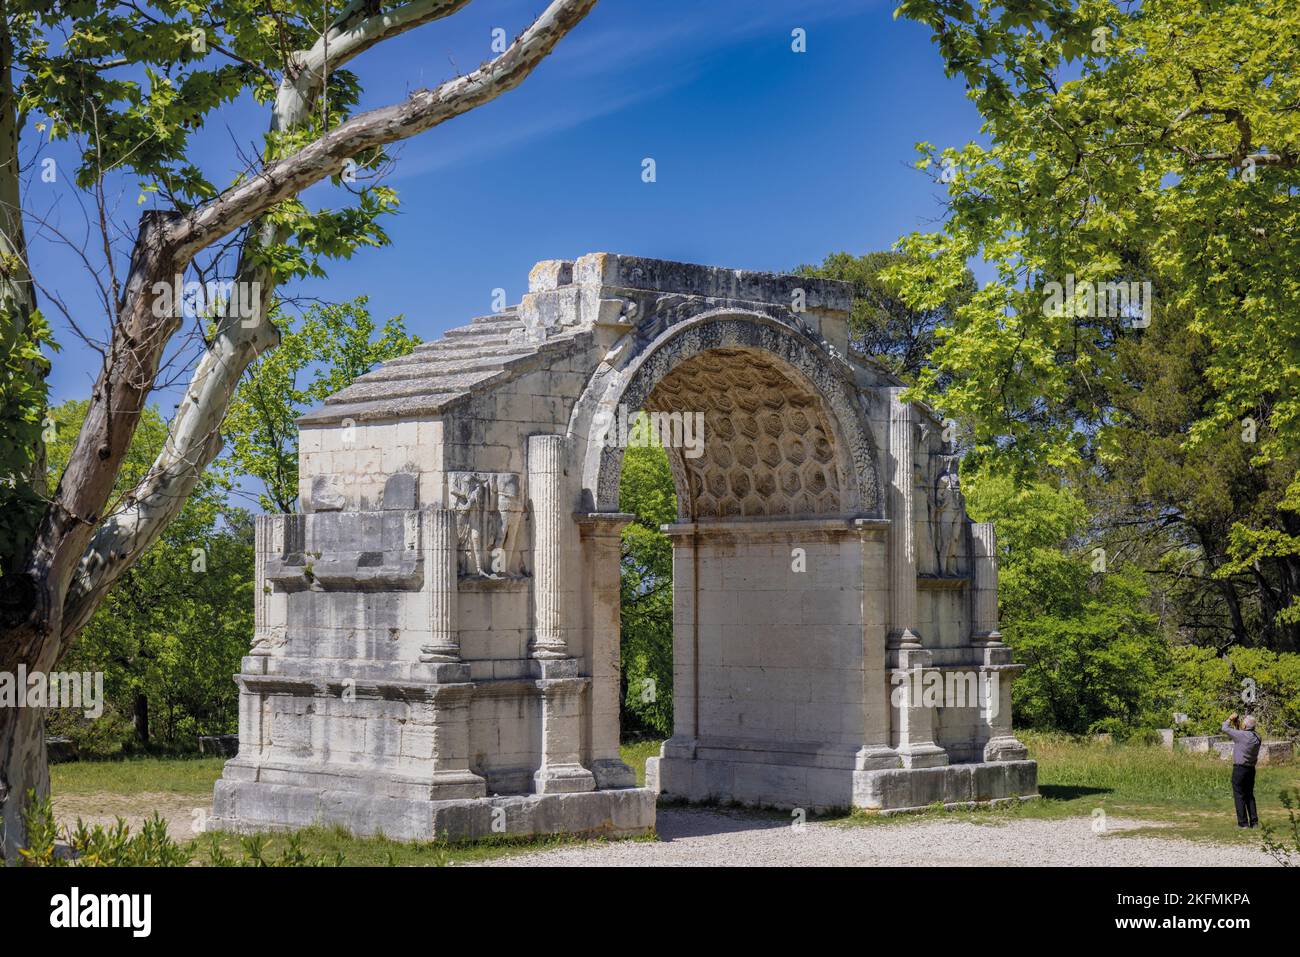 Saint-Rémy-de-Provence, Bouches-du-Rhône, Provence, France.  The Arc Municipal, a triumphal arch which was the entrance to the Roman city of Glanum. Stock Photo